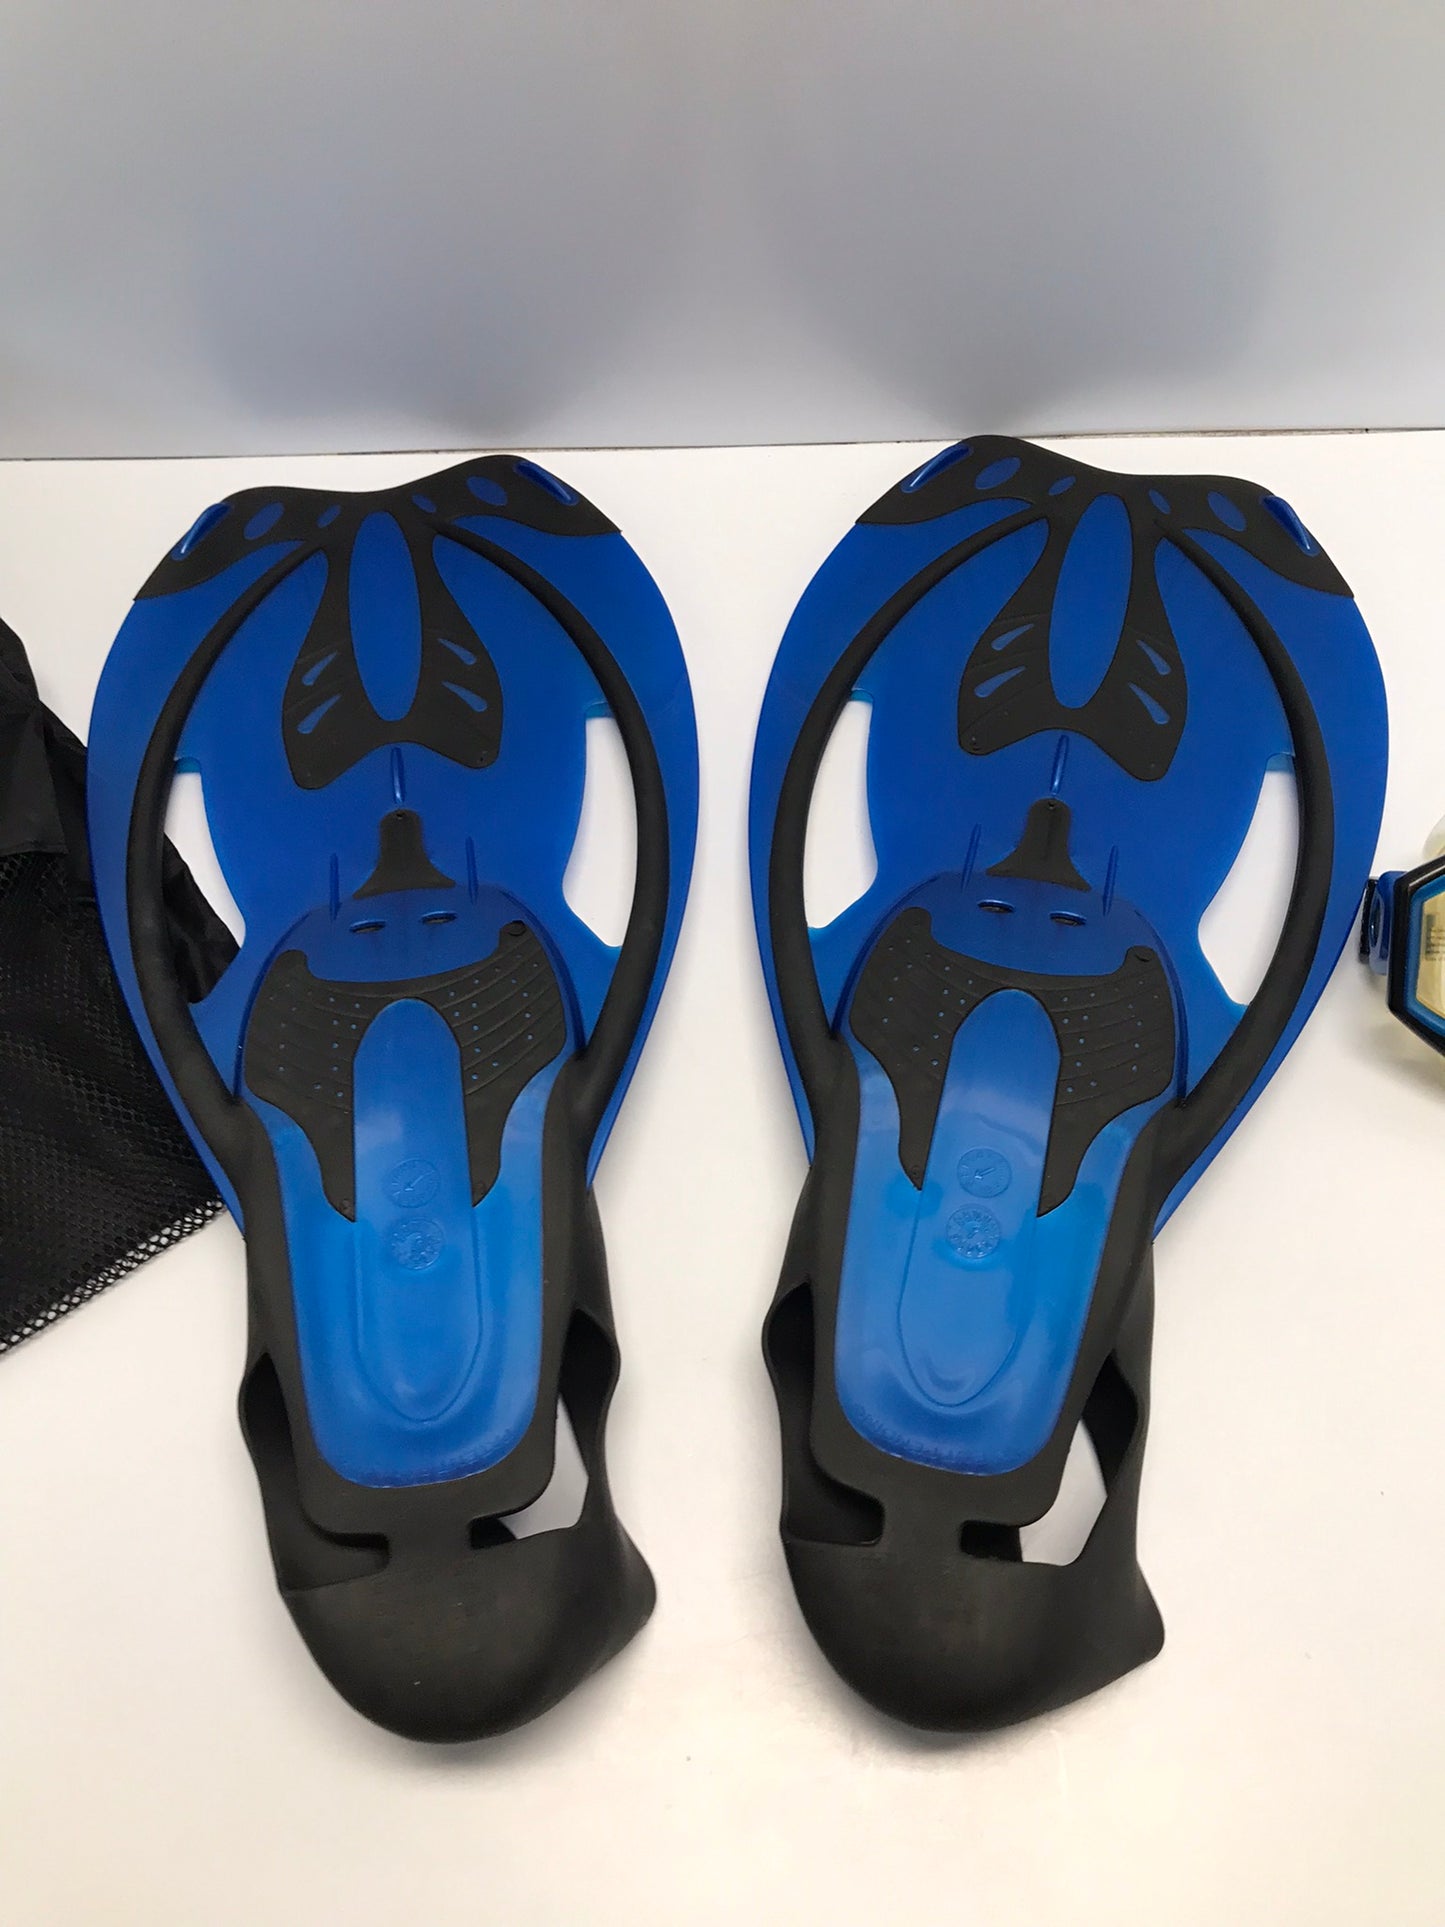 Snorkel Set Men's Size 11-14 Blue Black Used Once Like New